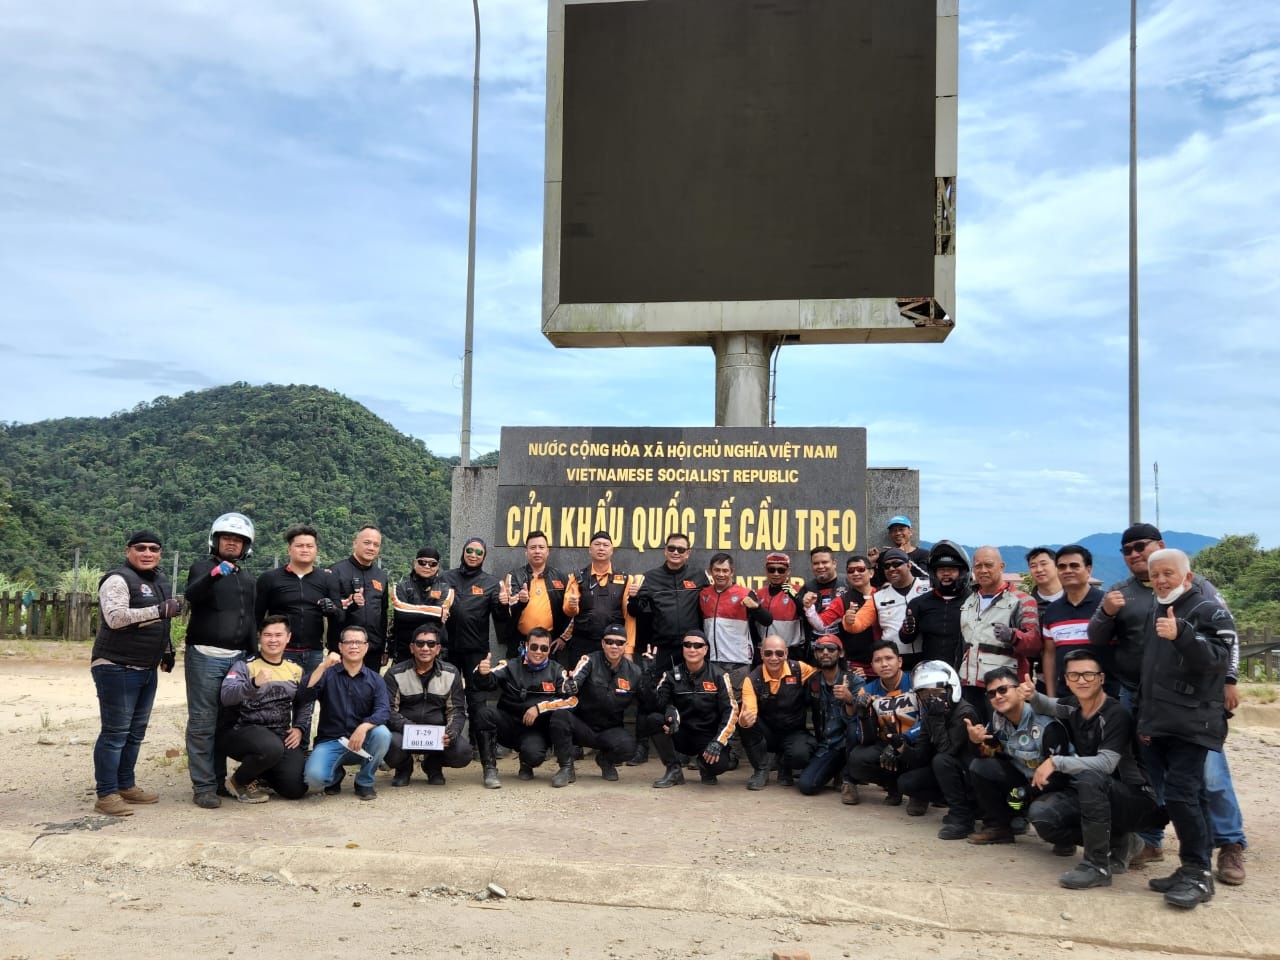 Fostering Indonesia-Vietnam friendship through the love for motorbikes